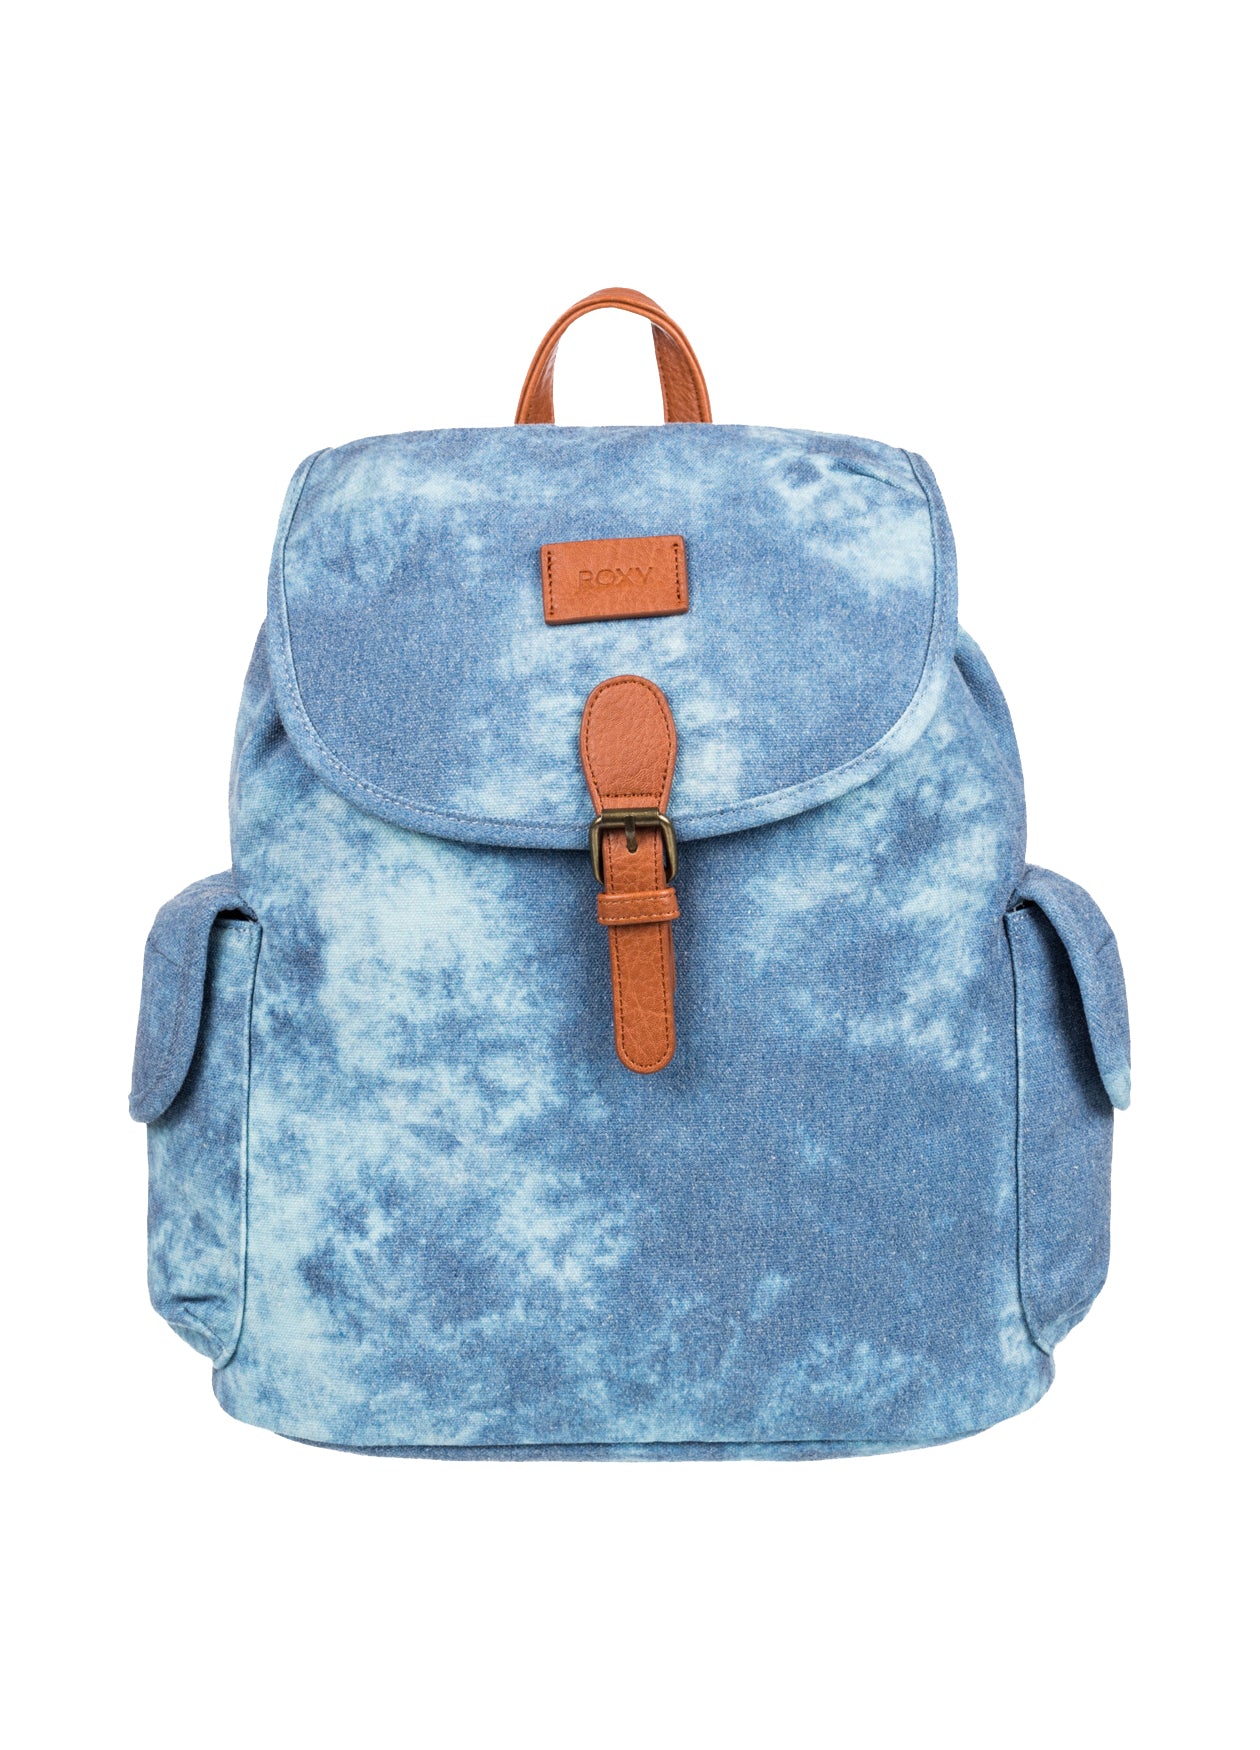 Roxy Ocean Life Medium Backpack